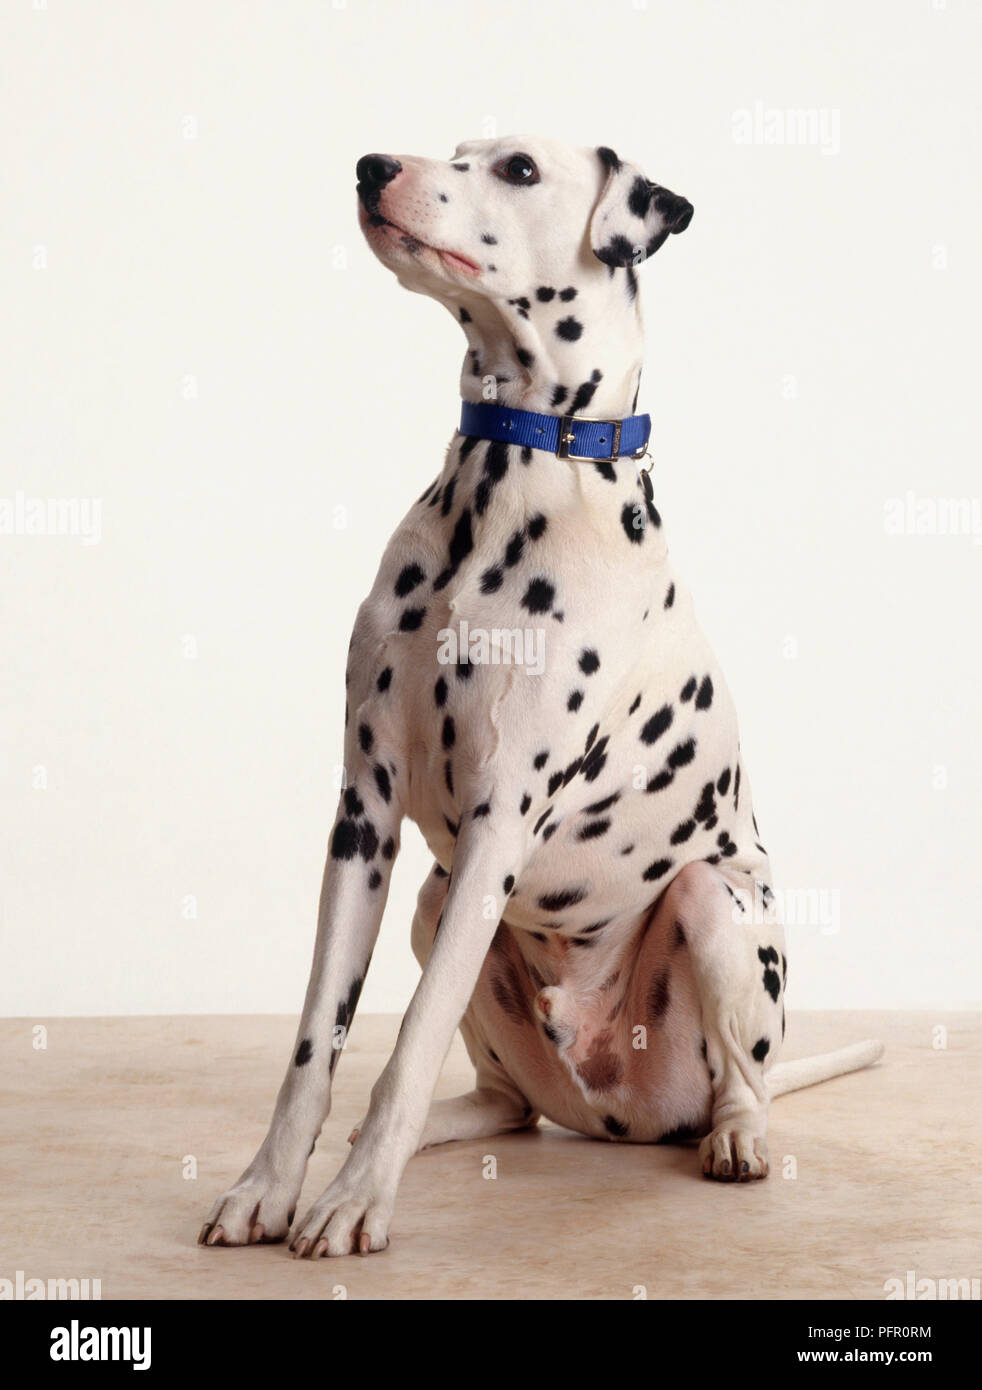 Perro Dálmata macho sentado, vestido de azul collar Fotografía de stock -  Alamy